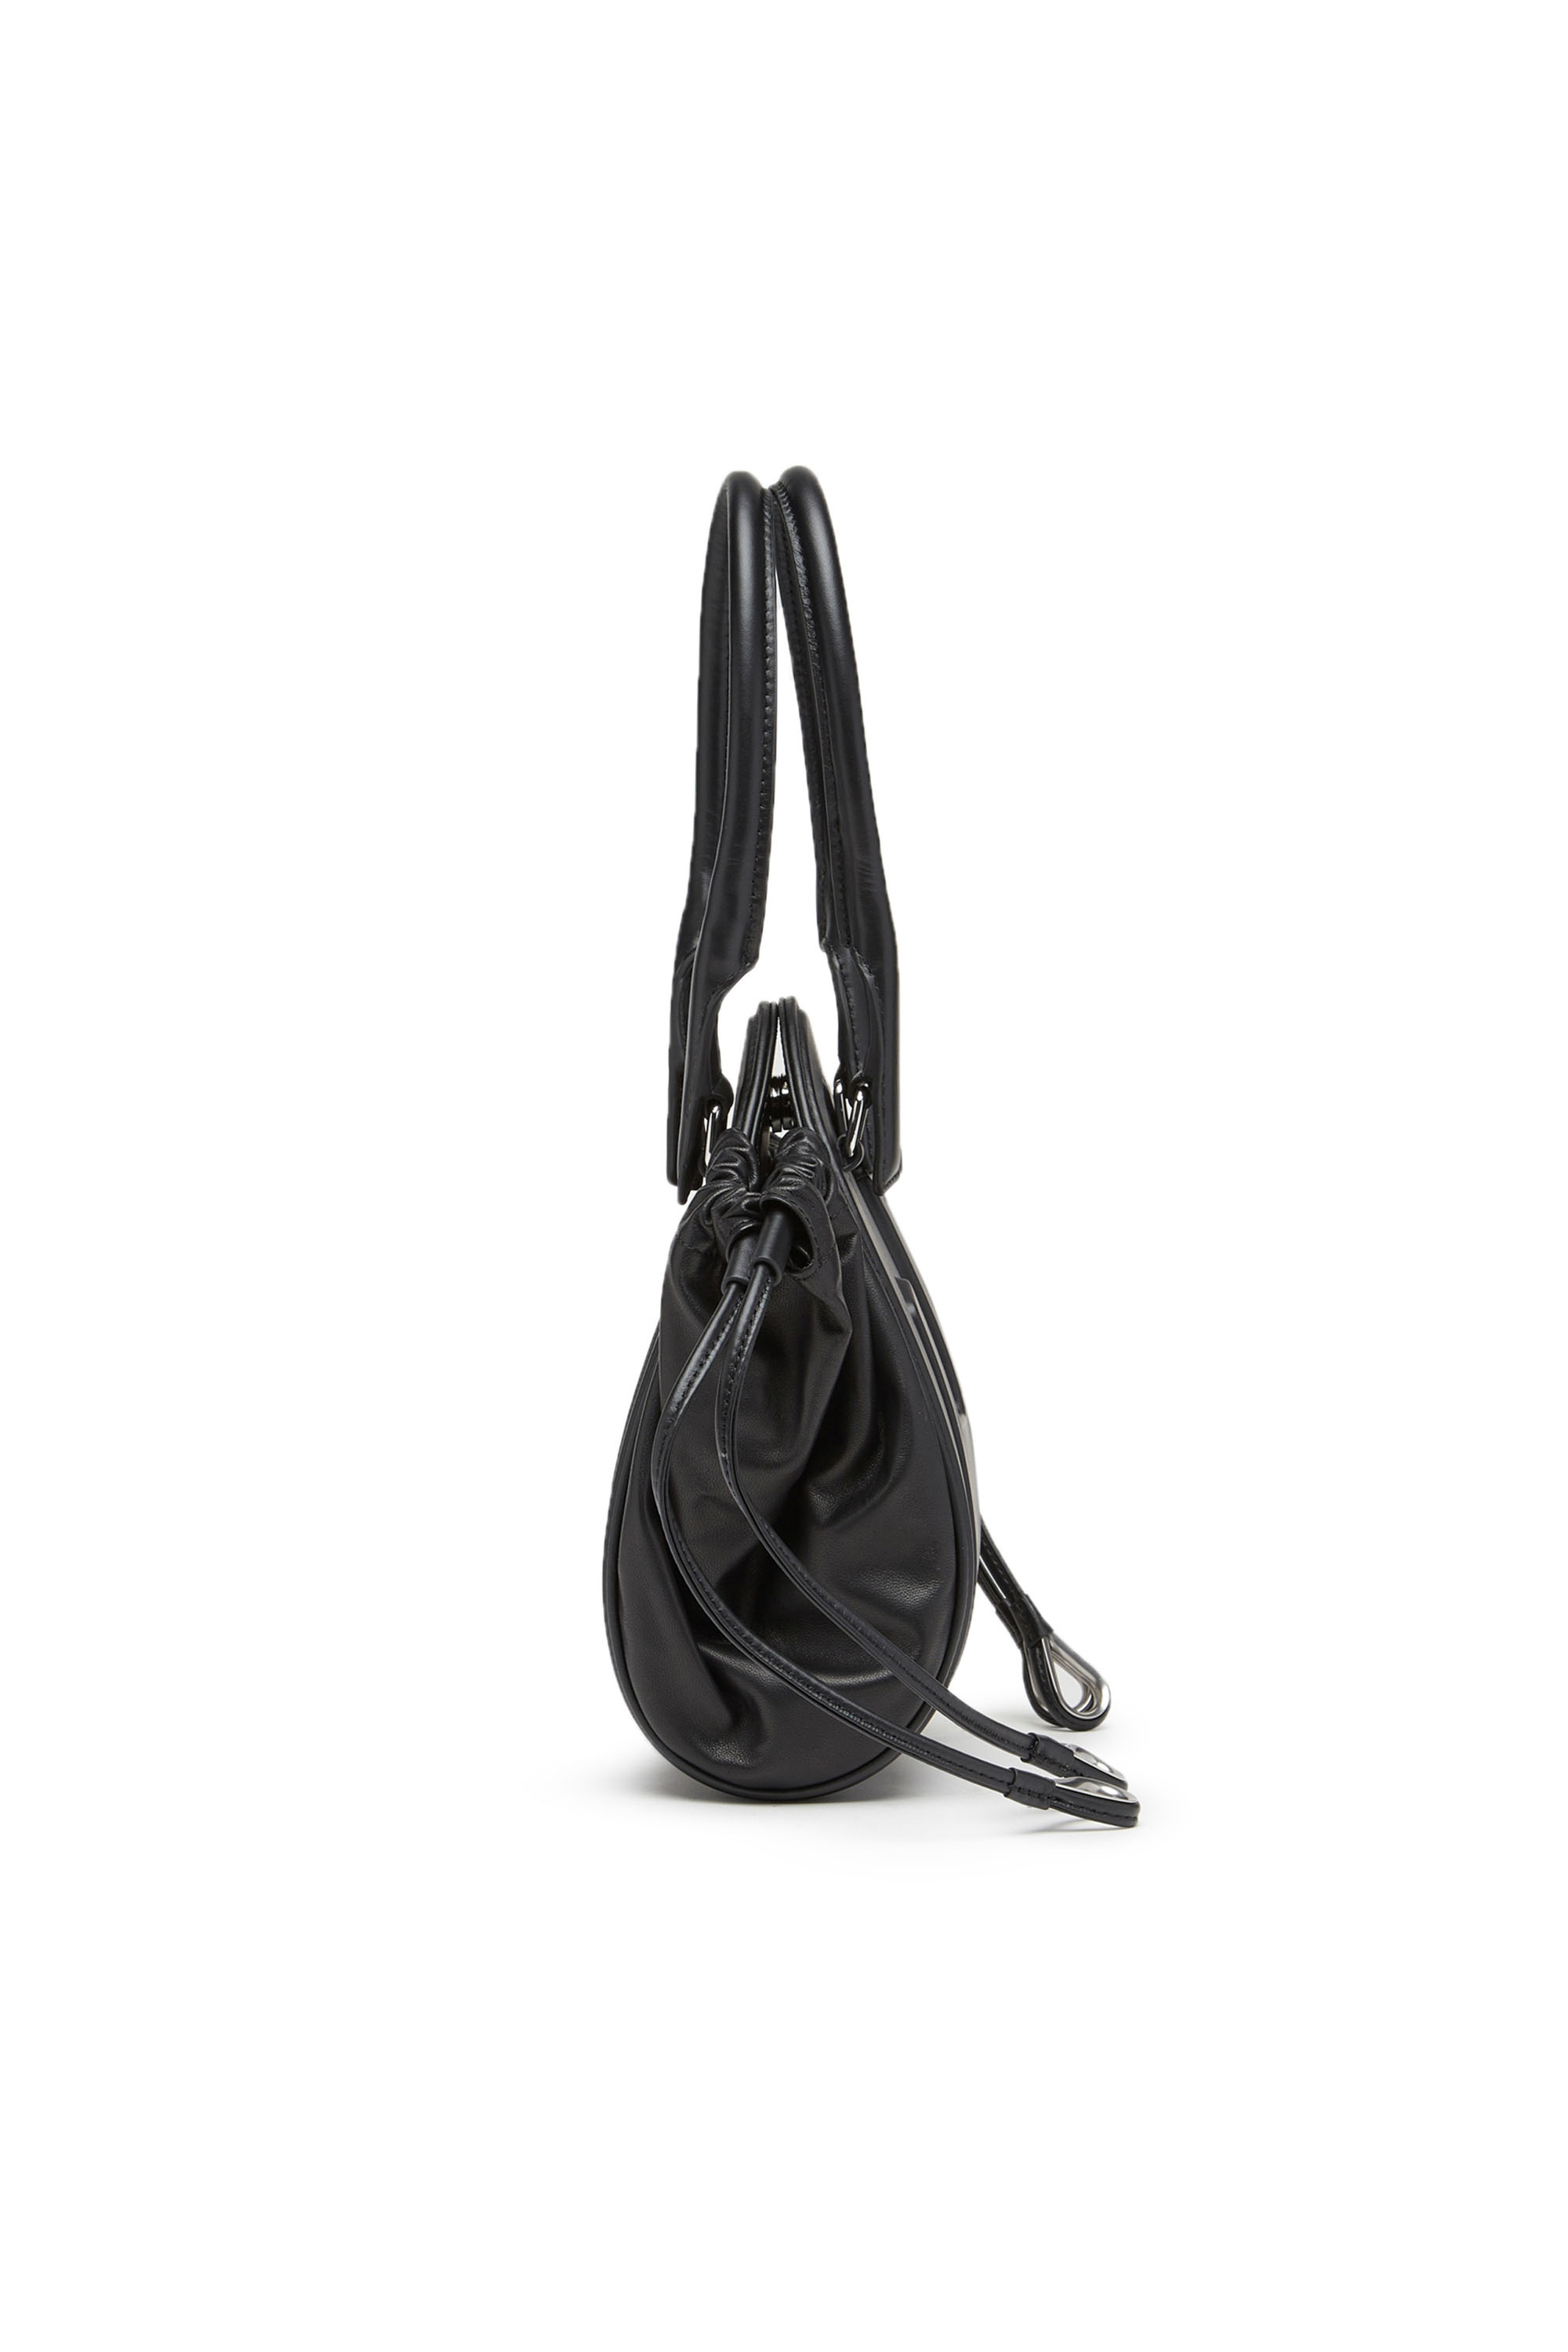 Diesel - 1DR-FOLD XS, Woman 1DR-Fold XS-Oval logo handbag in nappa leather in Black - Image 3